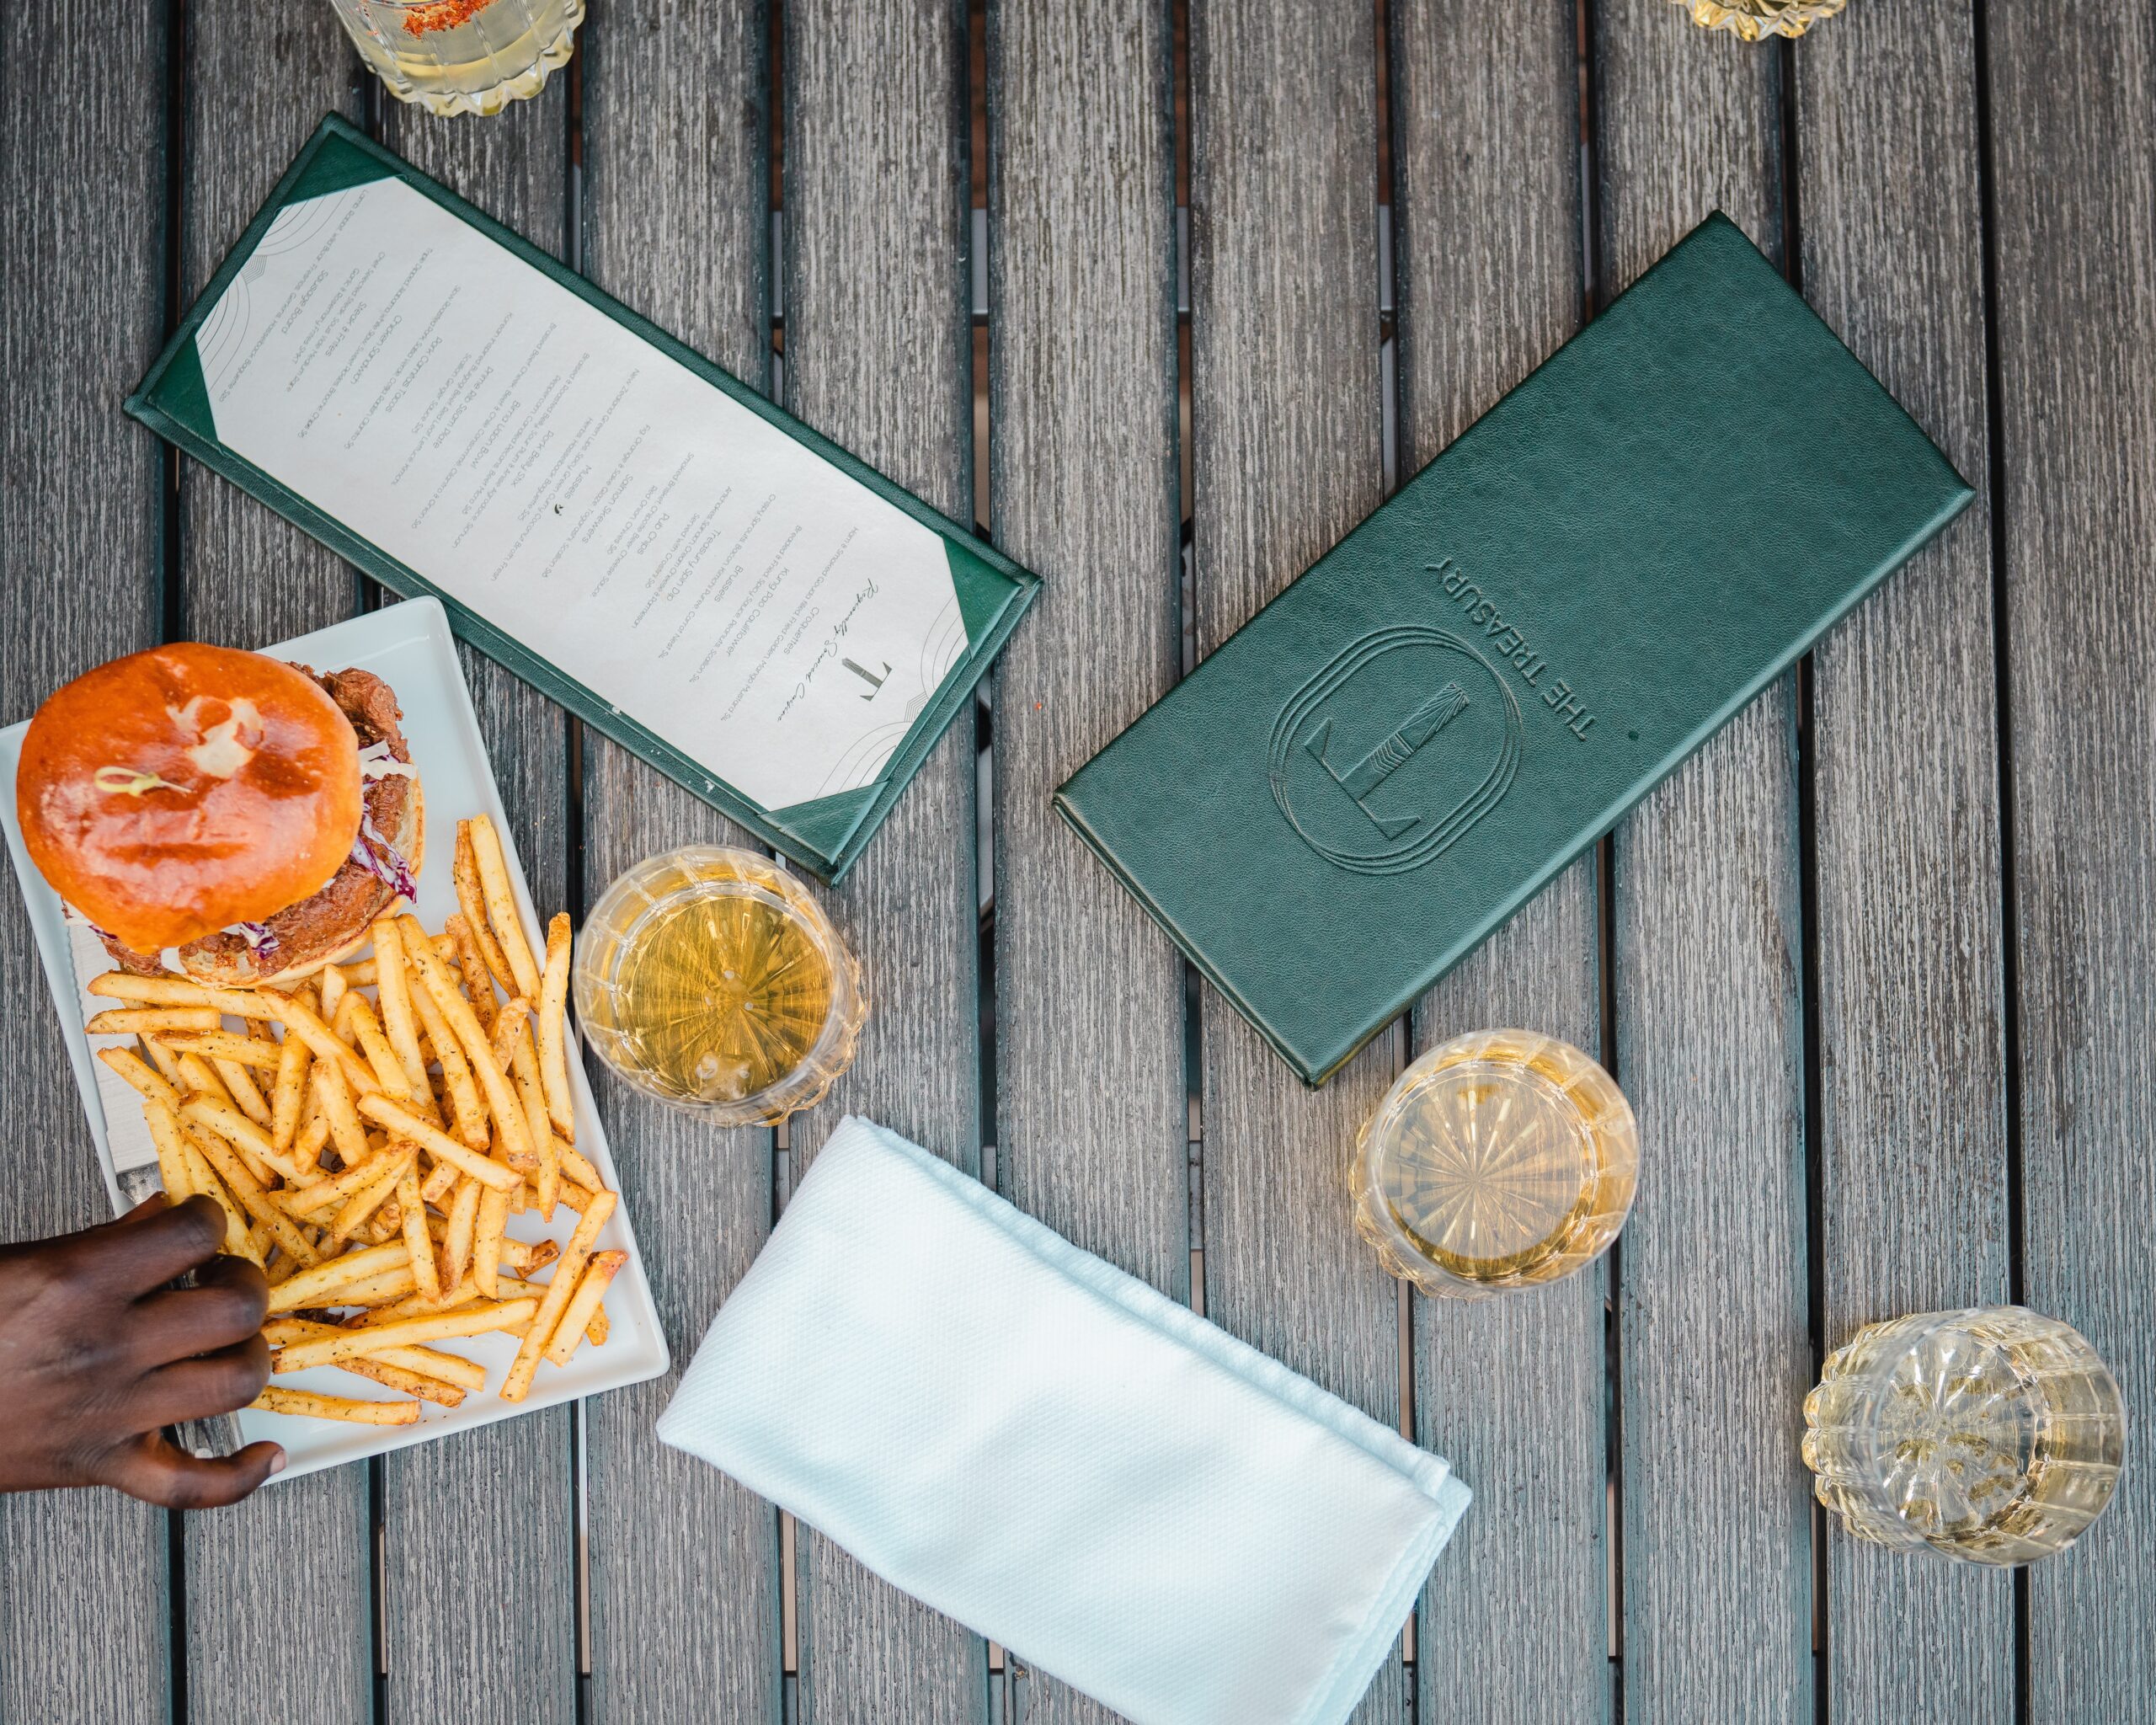 Should restaurants put carbon footprint labels on their menus?